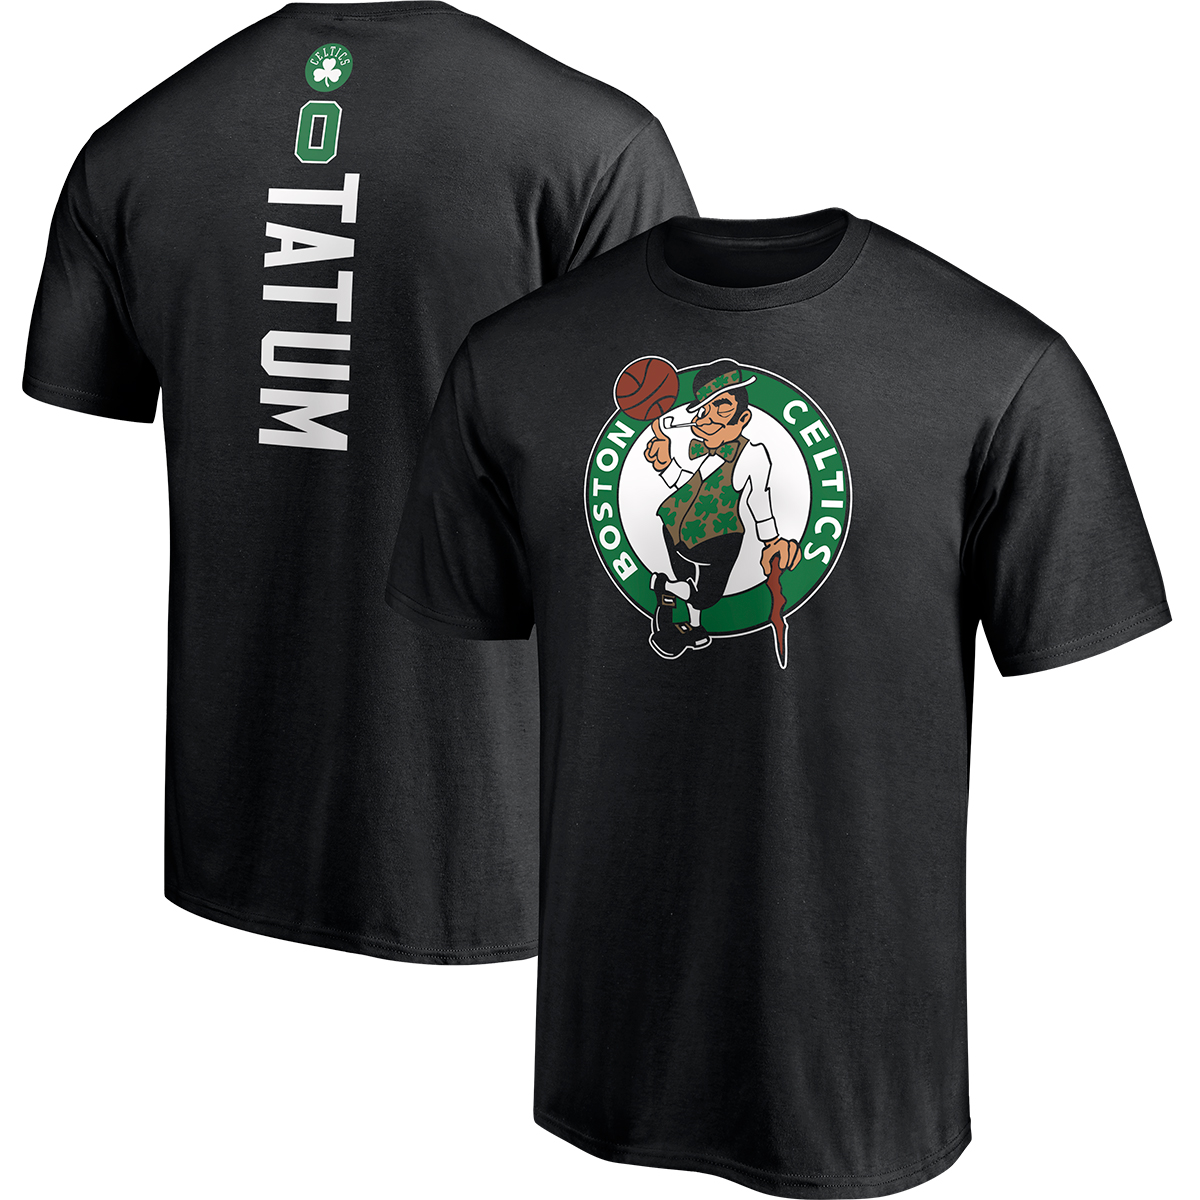 Boston Celtics Men's Fanatics Tatum Playmaker Name & Number Short-Sleeve Tee